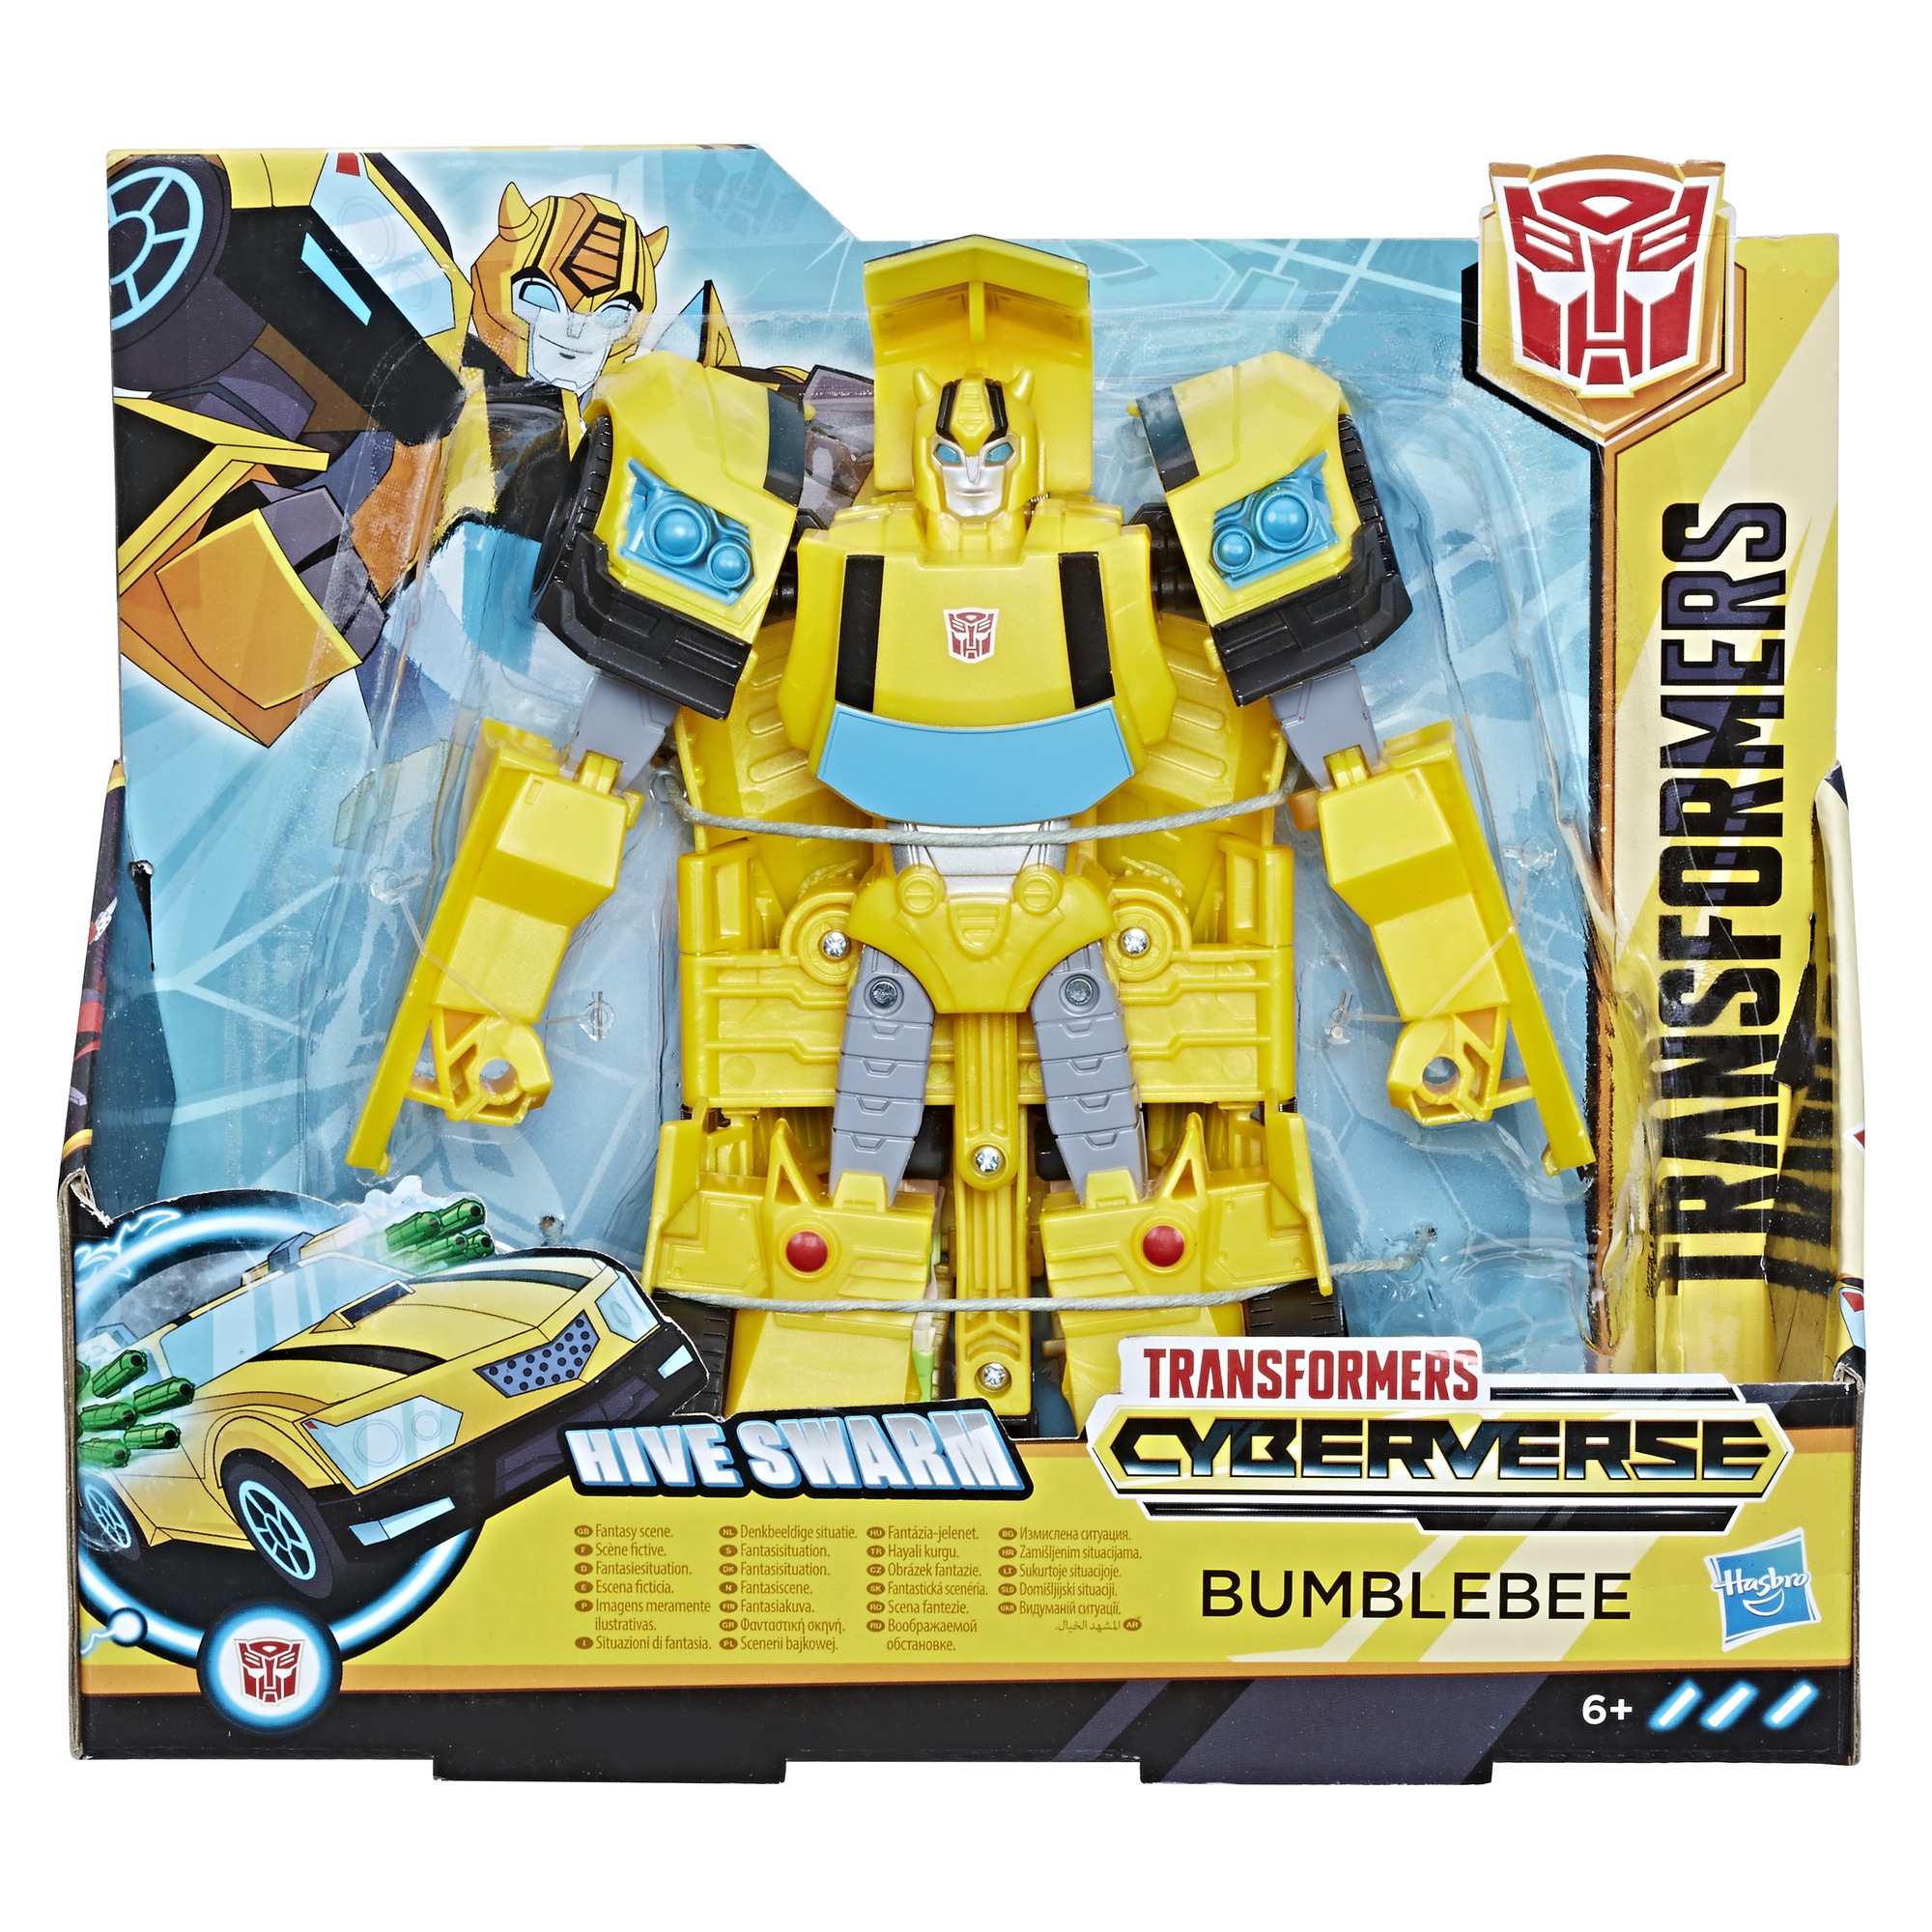 Transformers Cyberverse Action Attackers Ultra Class Hot Rod E1886 E1886 - Transformers